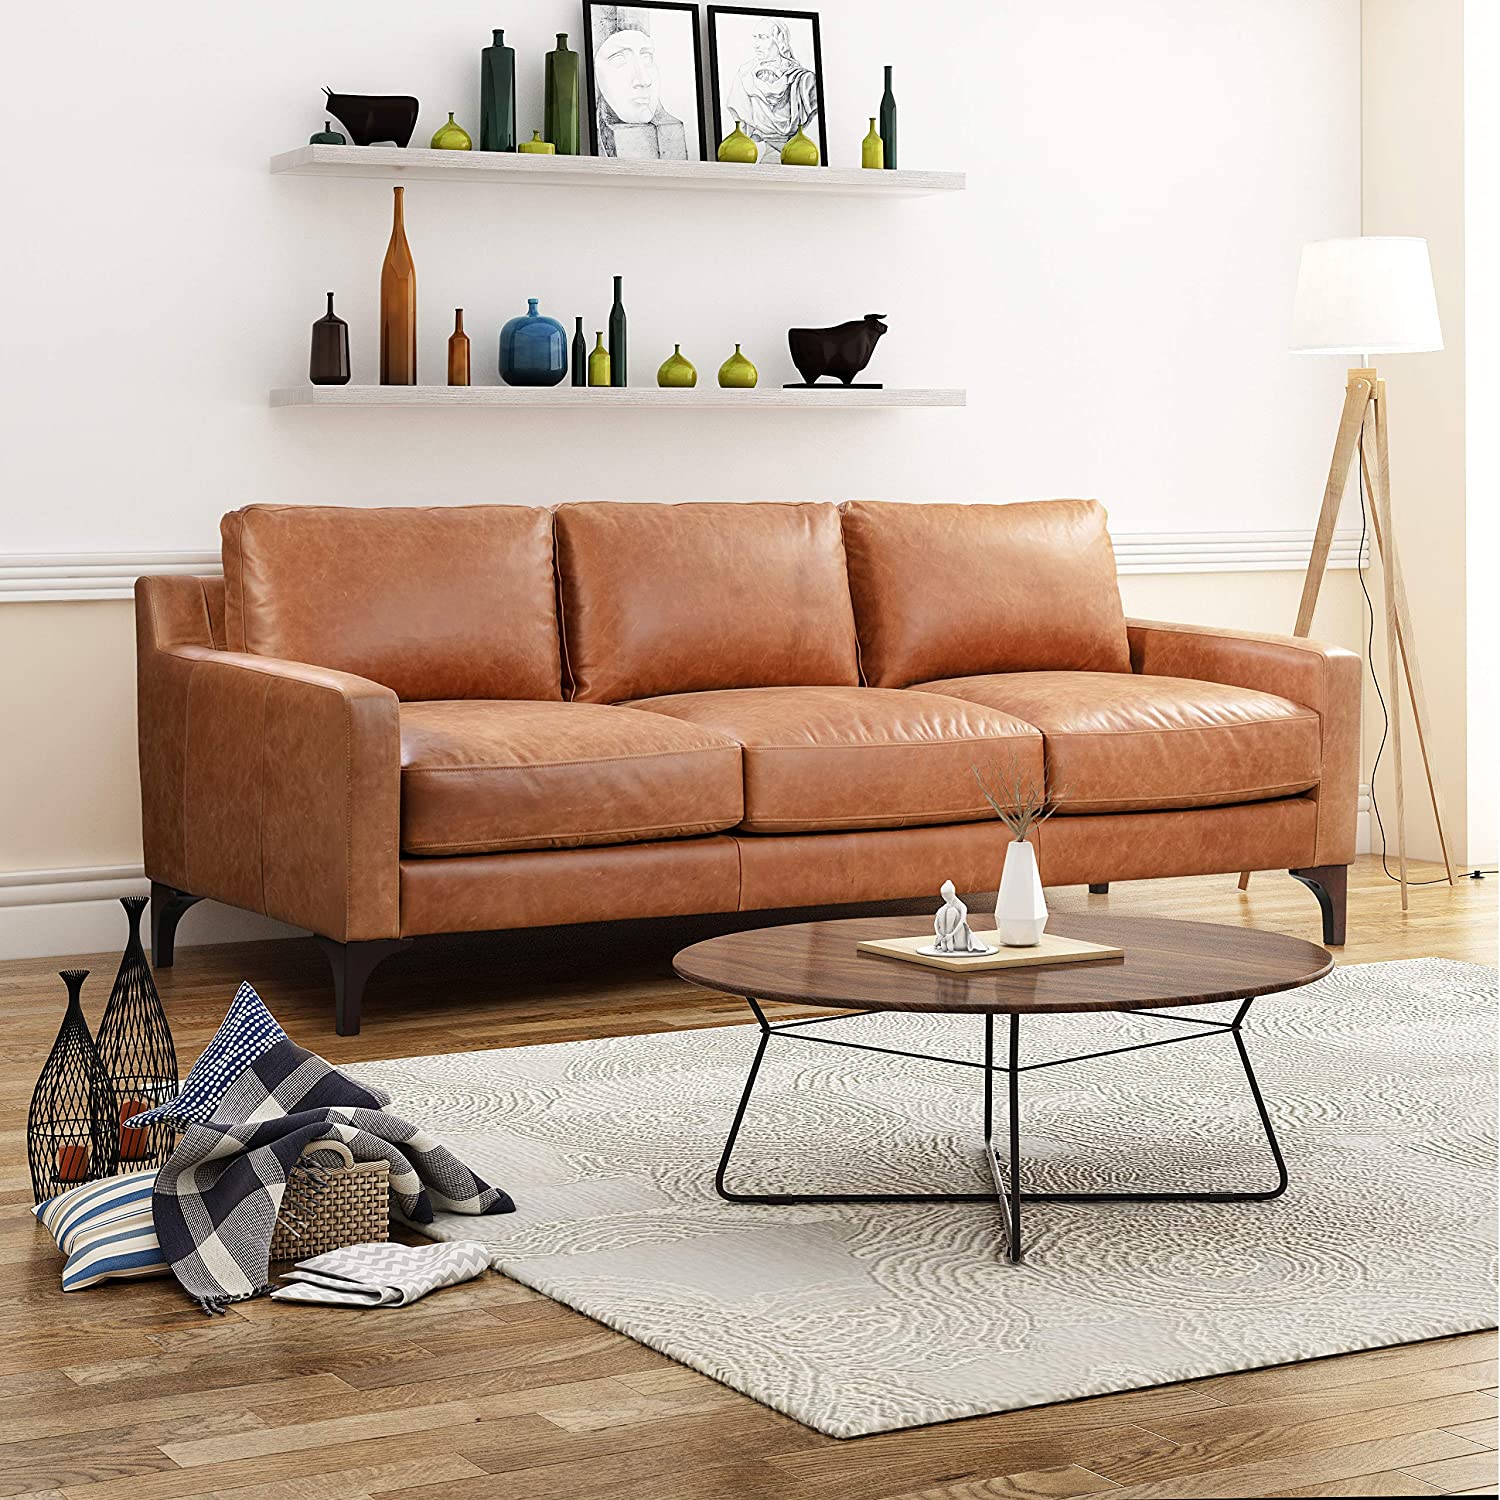 genuine leather mid century modern leather sofa to buy on amazon ...